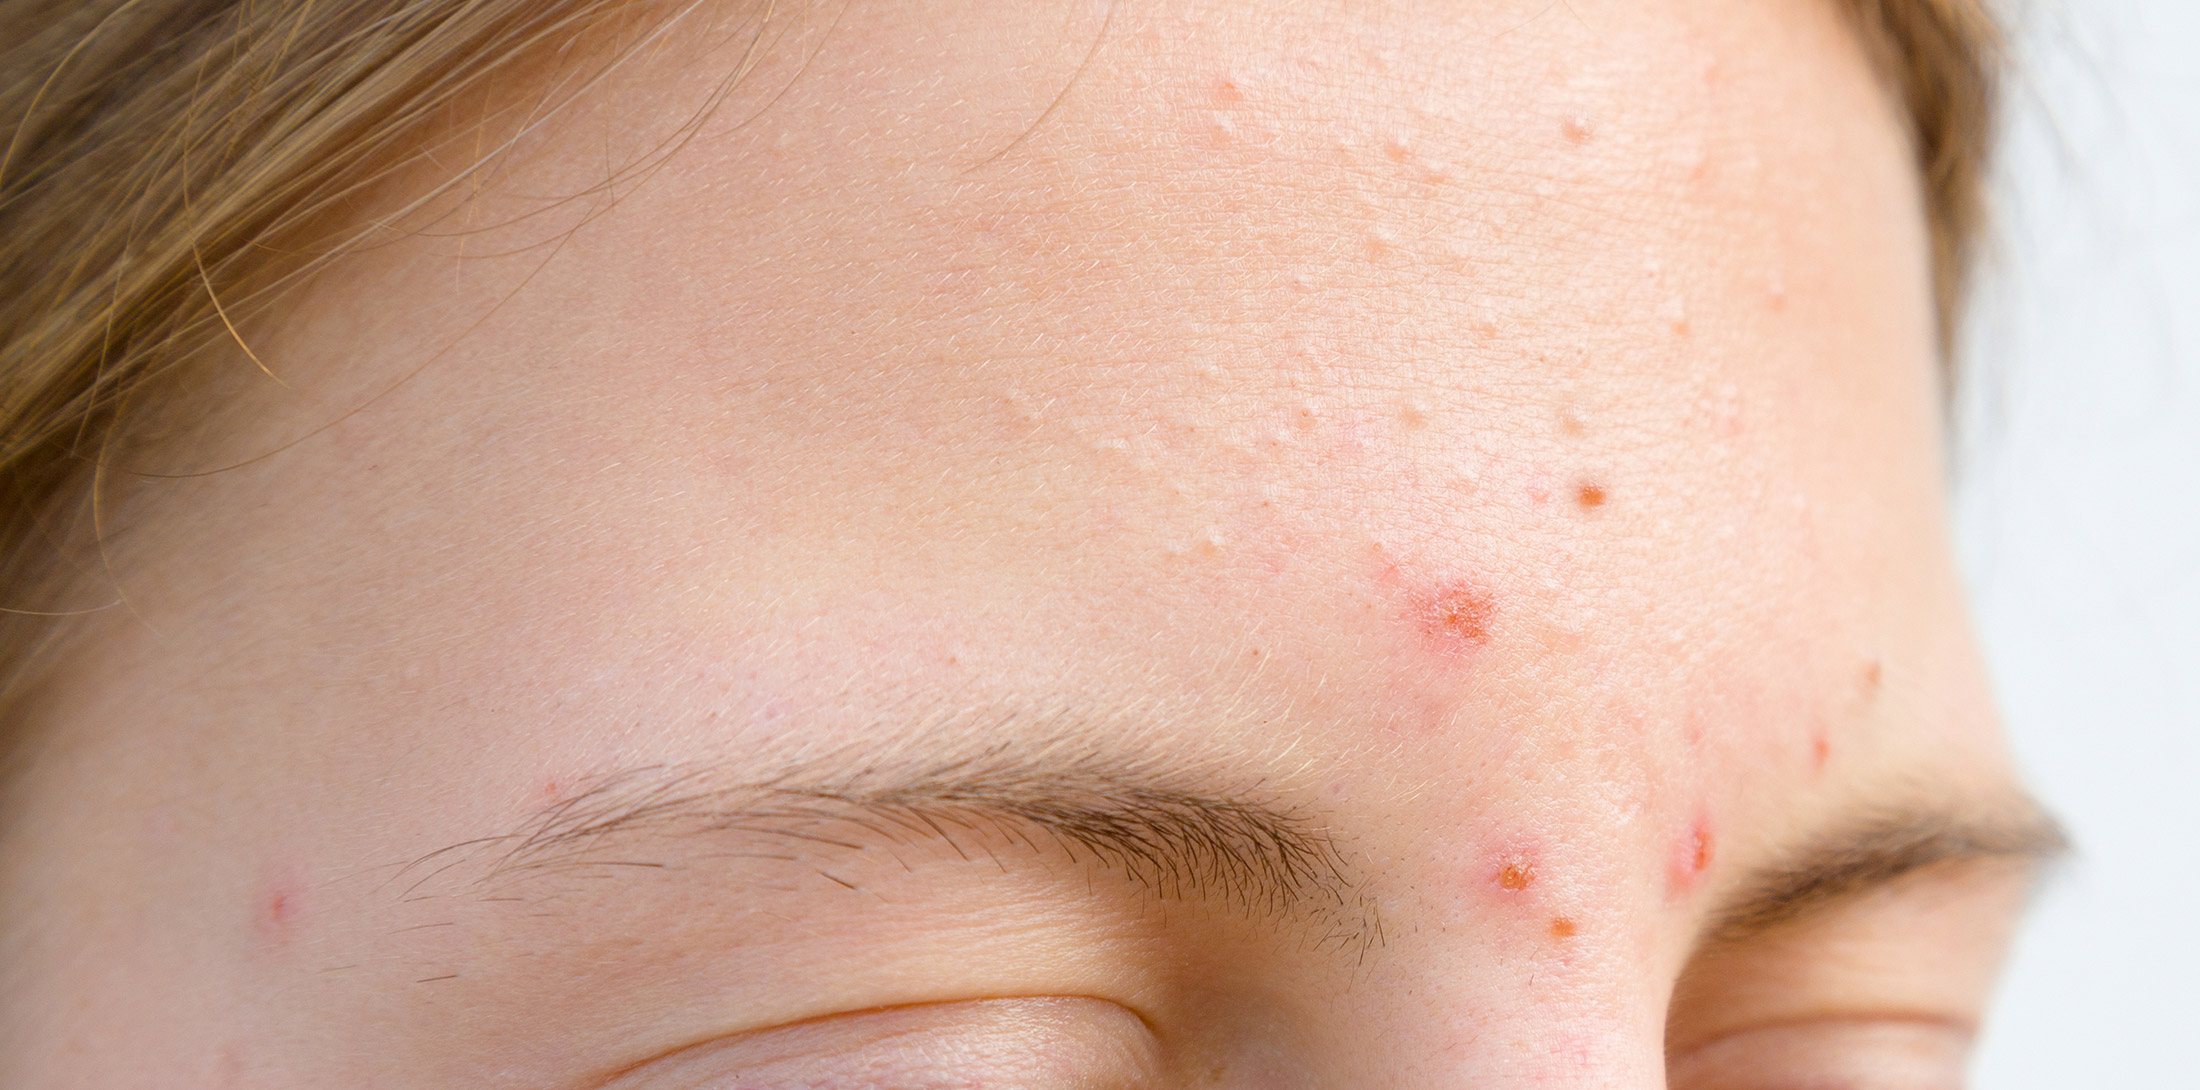 acne scars condition